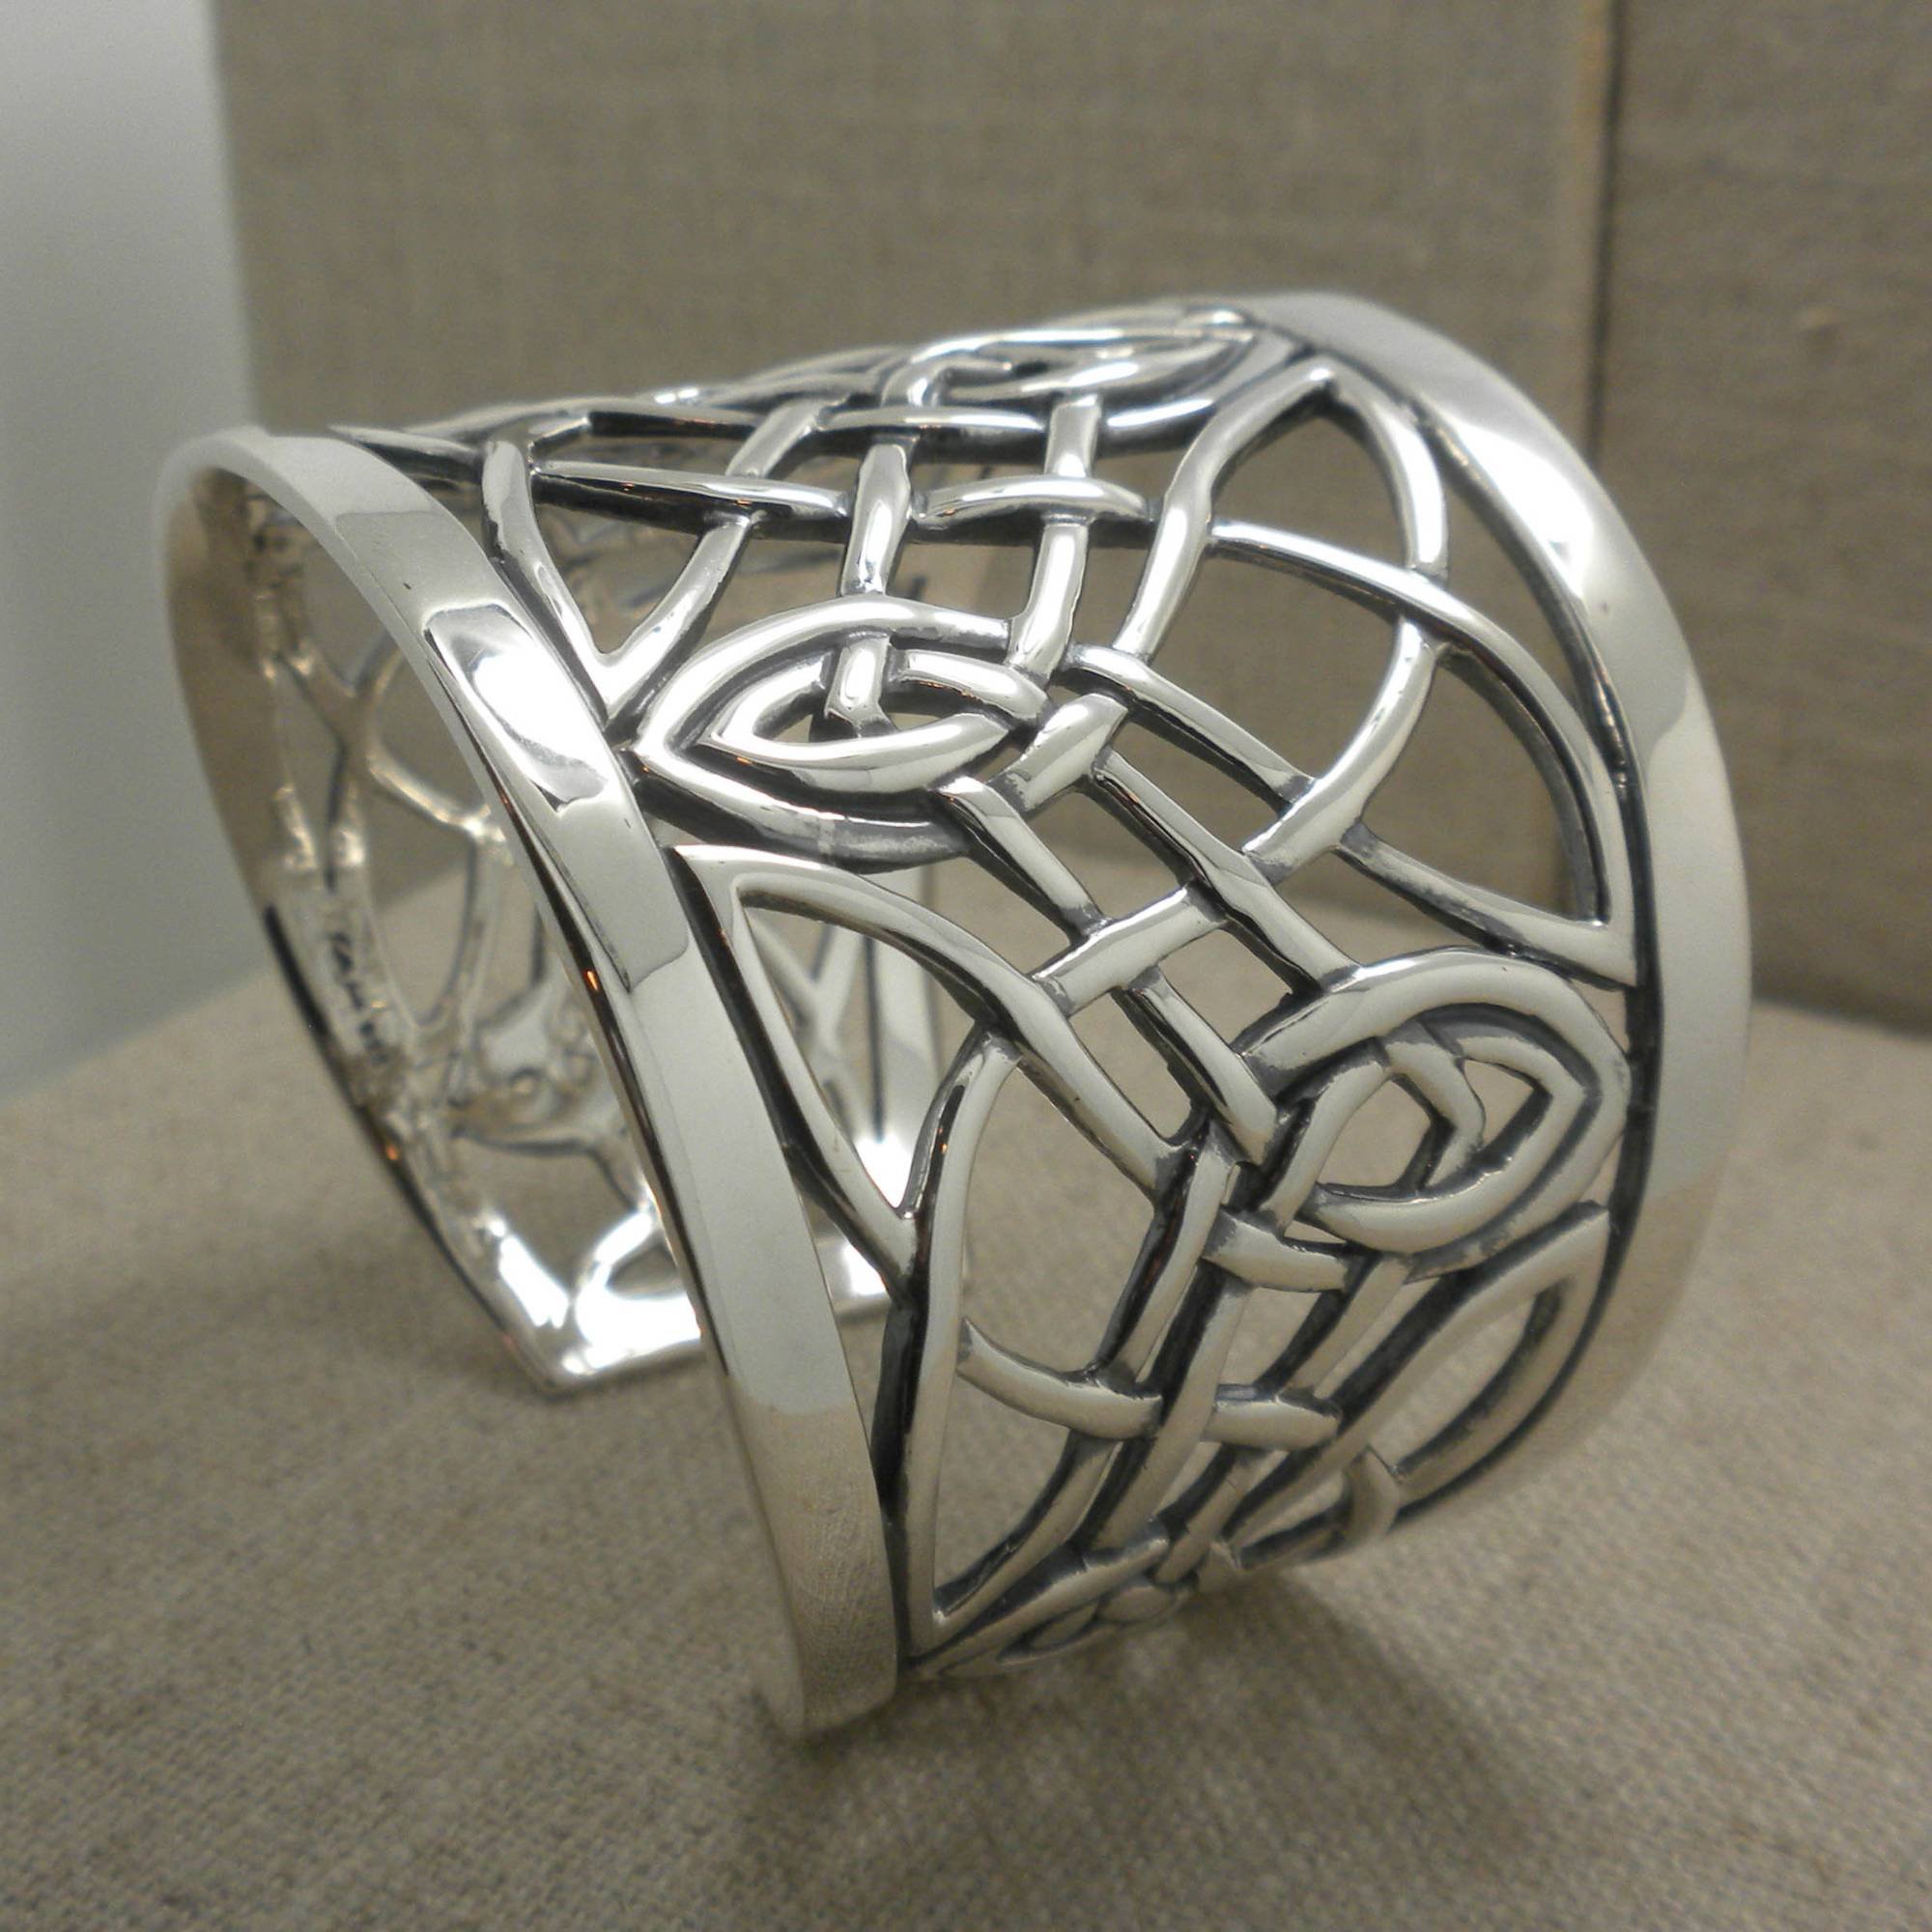 Elven Celtic Knotwork Cuff Bracelet by Keith Jack Jewelry 